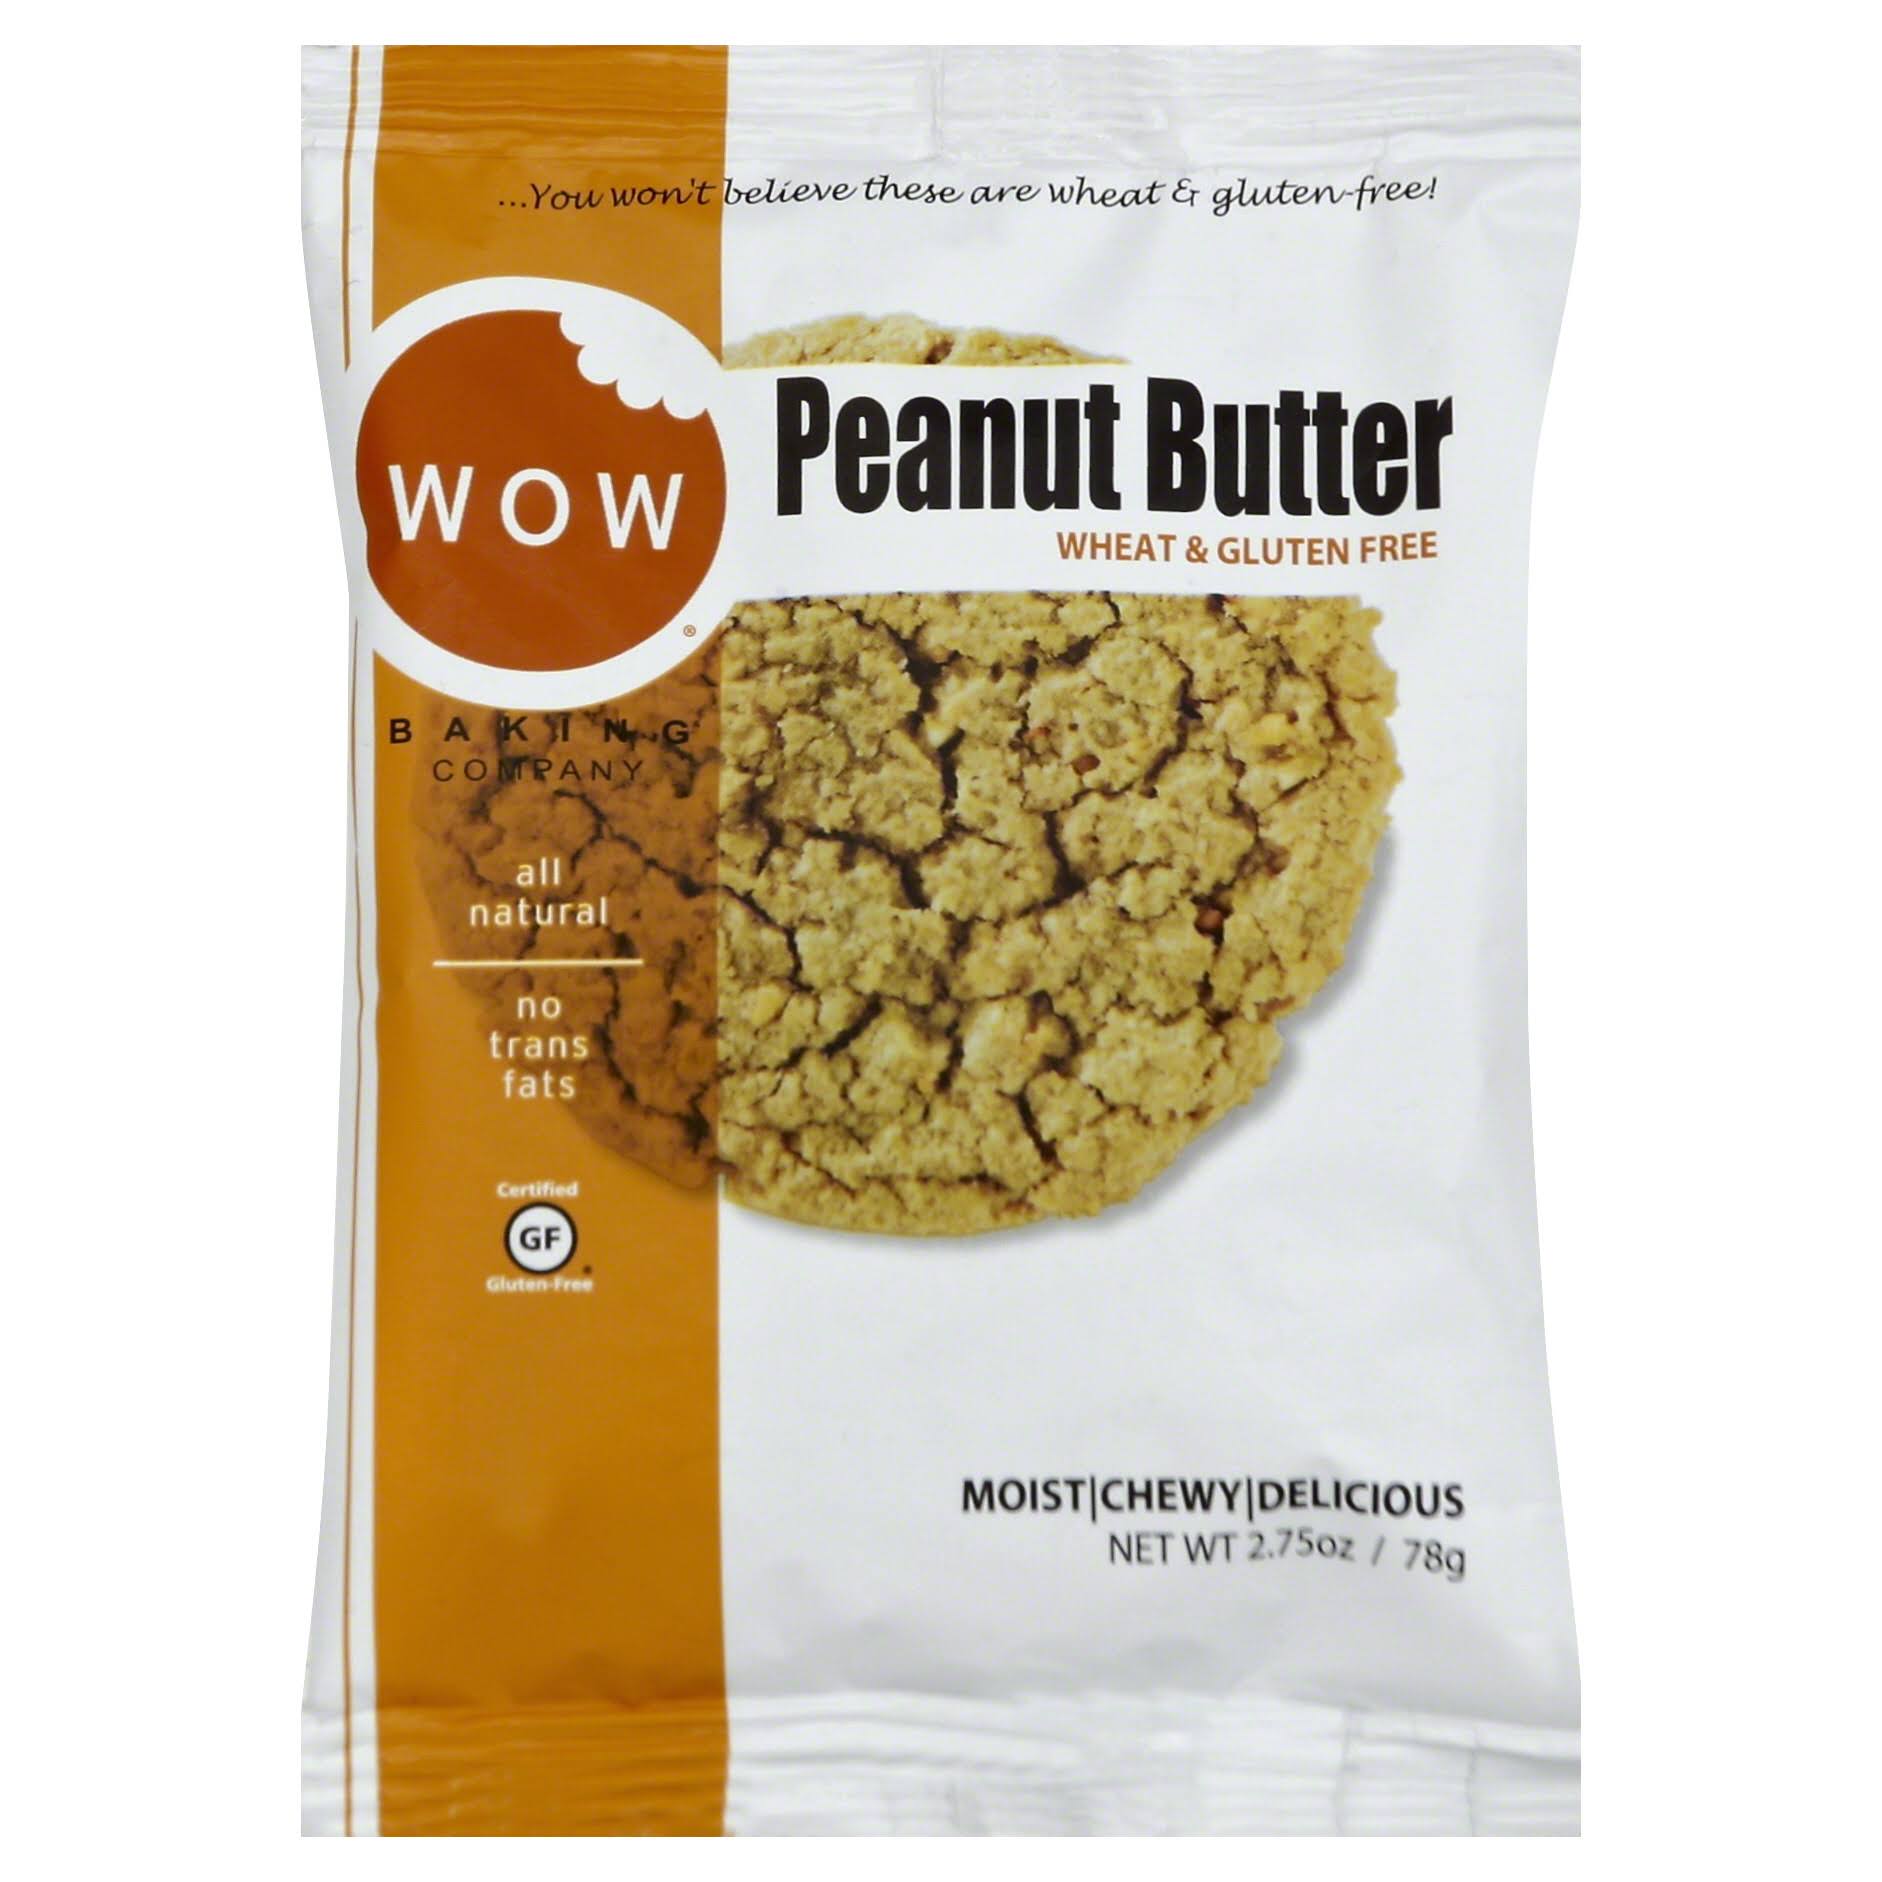 Wow Baking Cookie, Peanut Butter - 2.75 oz